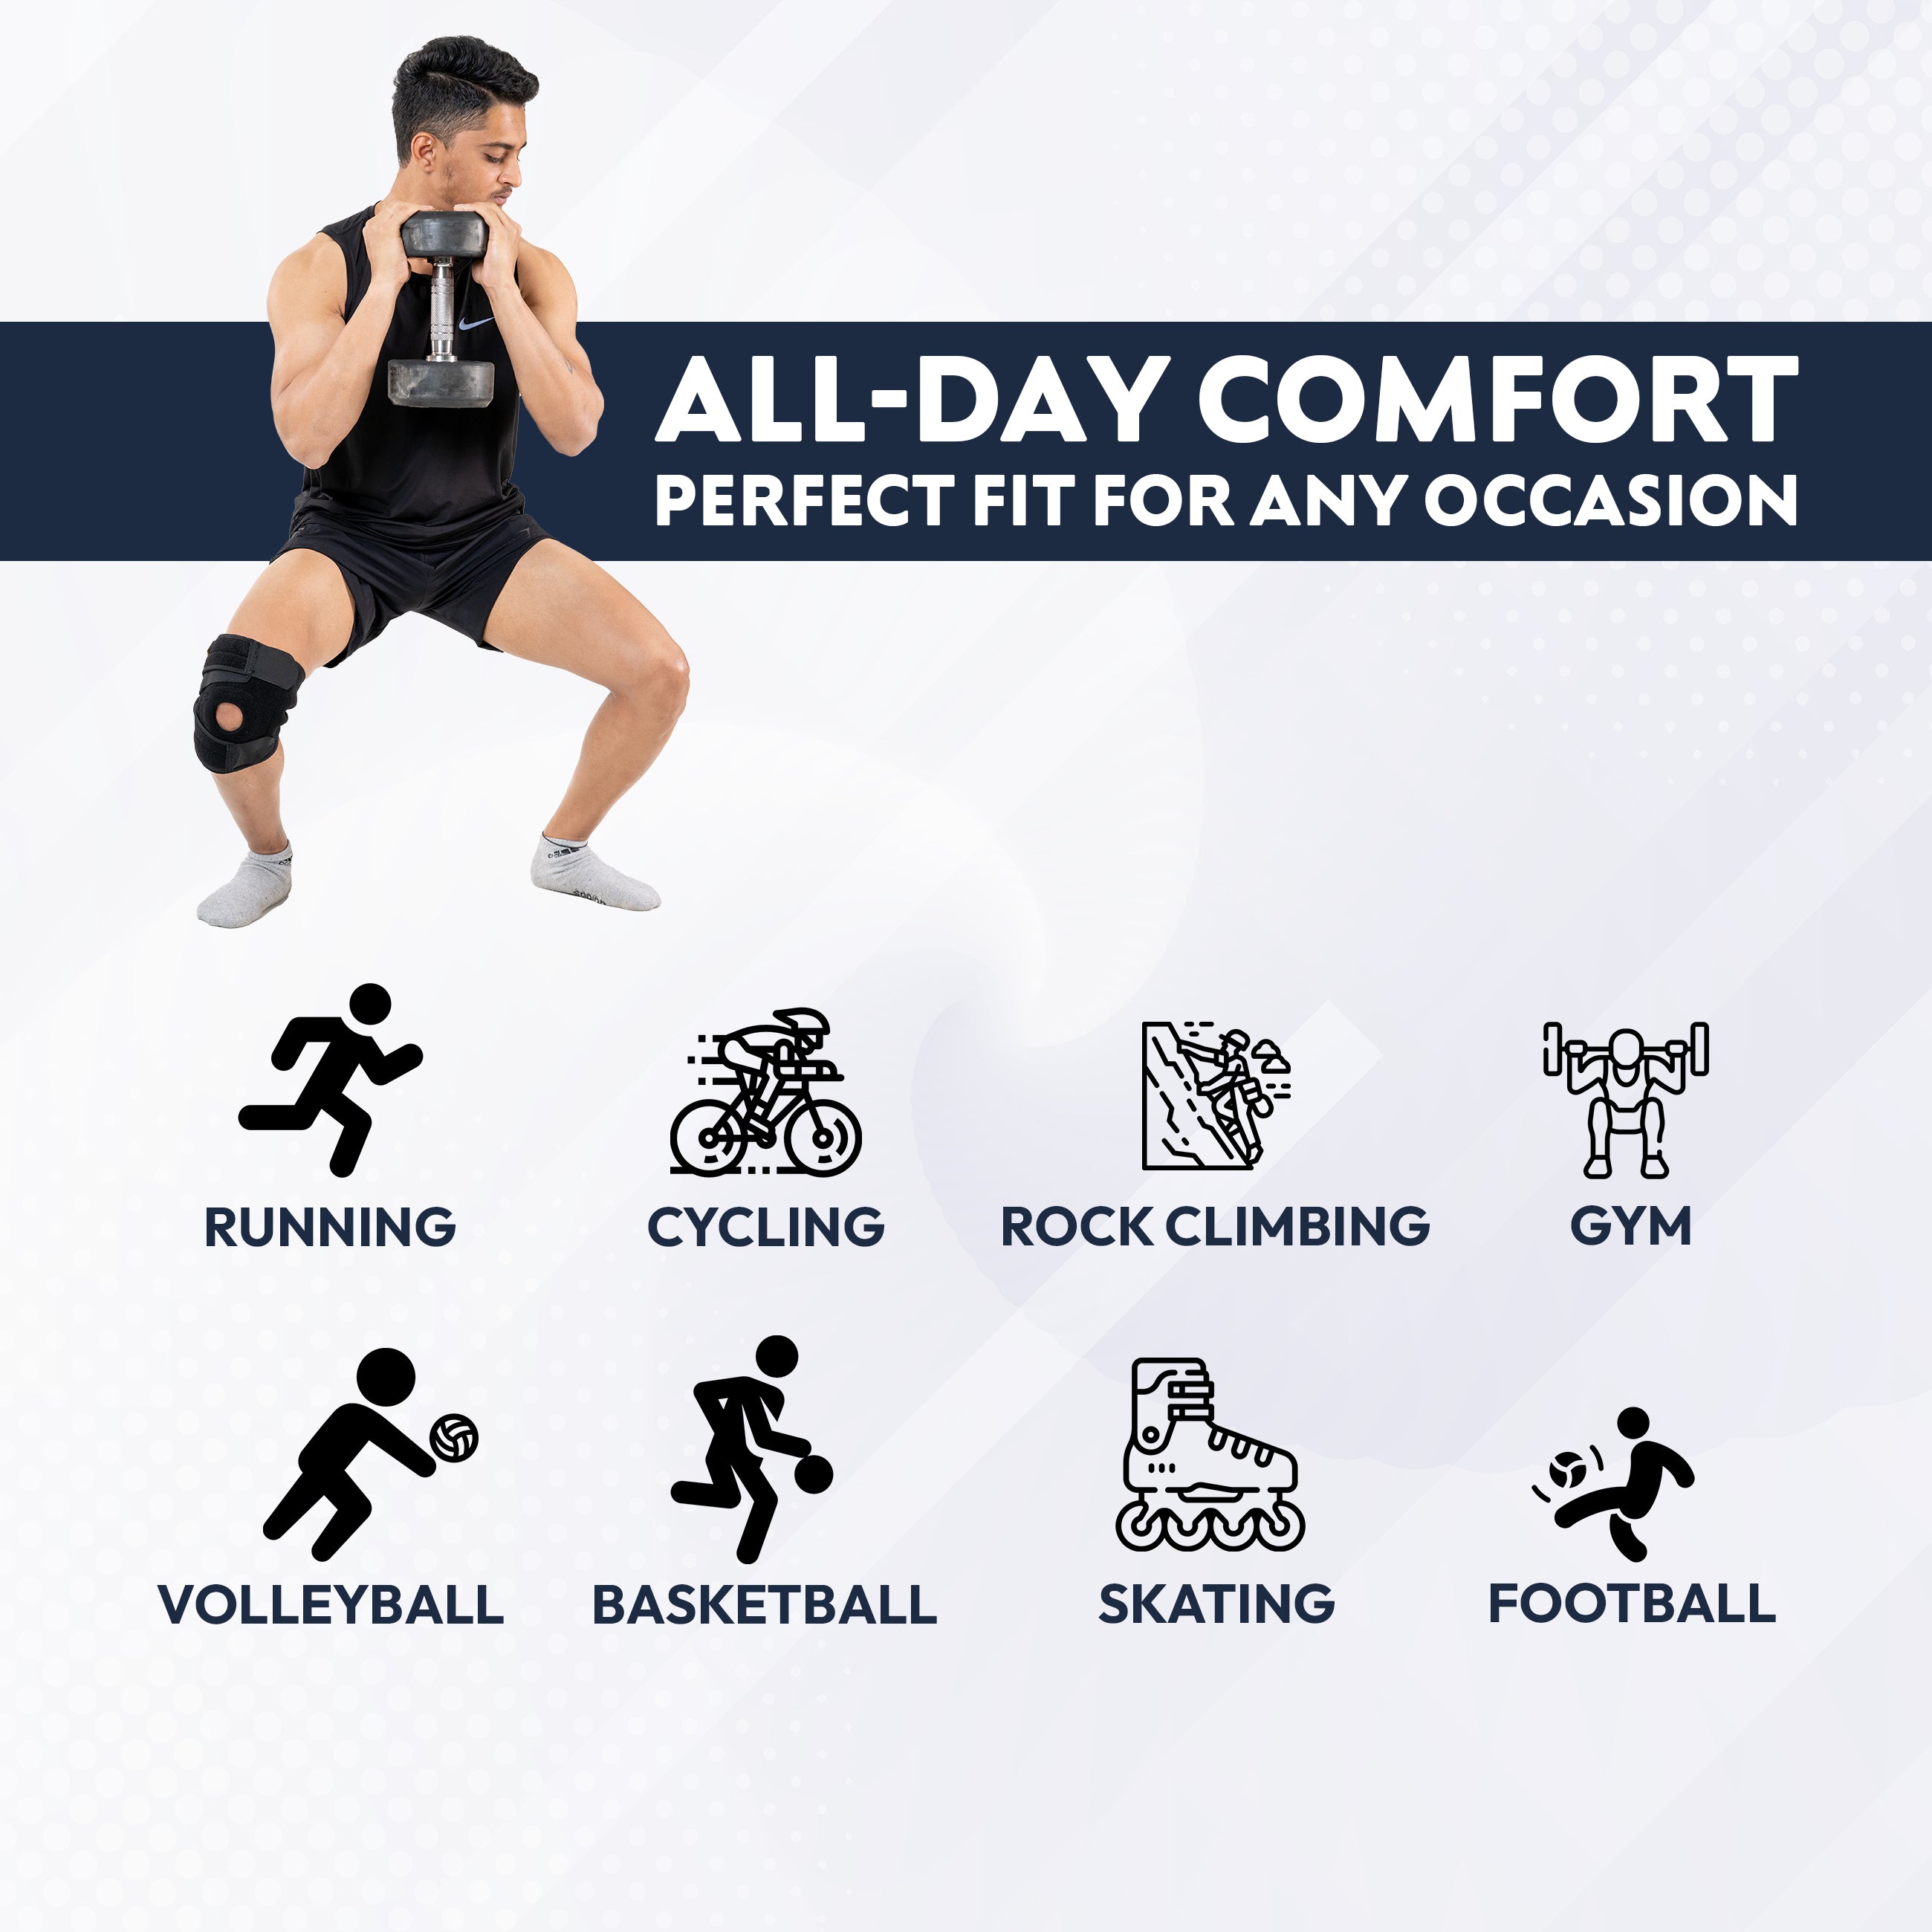 I5Joints-Non Slip Knee Brace-Specially Designed for Sports(Premium Knee Support Open Patella, Breathable Knee Cap Brace for Arthritis, Pain Relief, Sports for Men & Women)